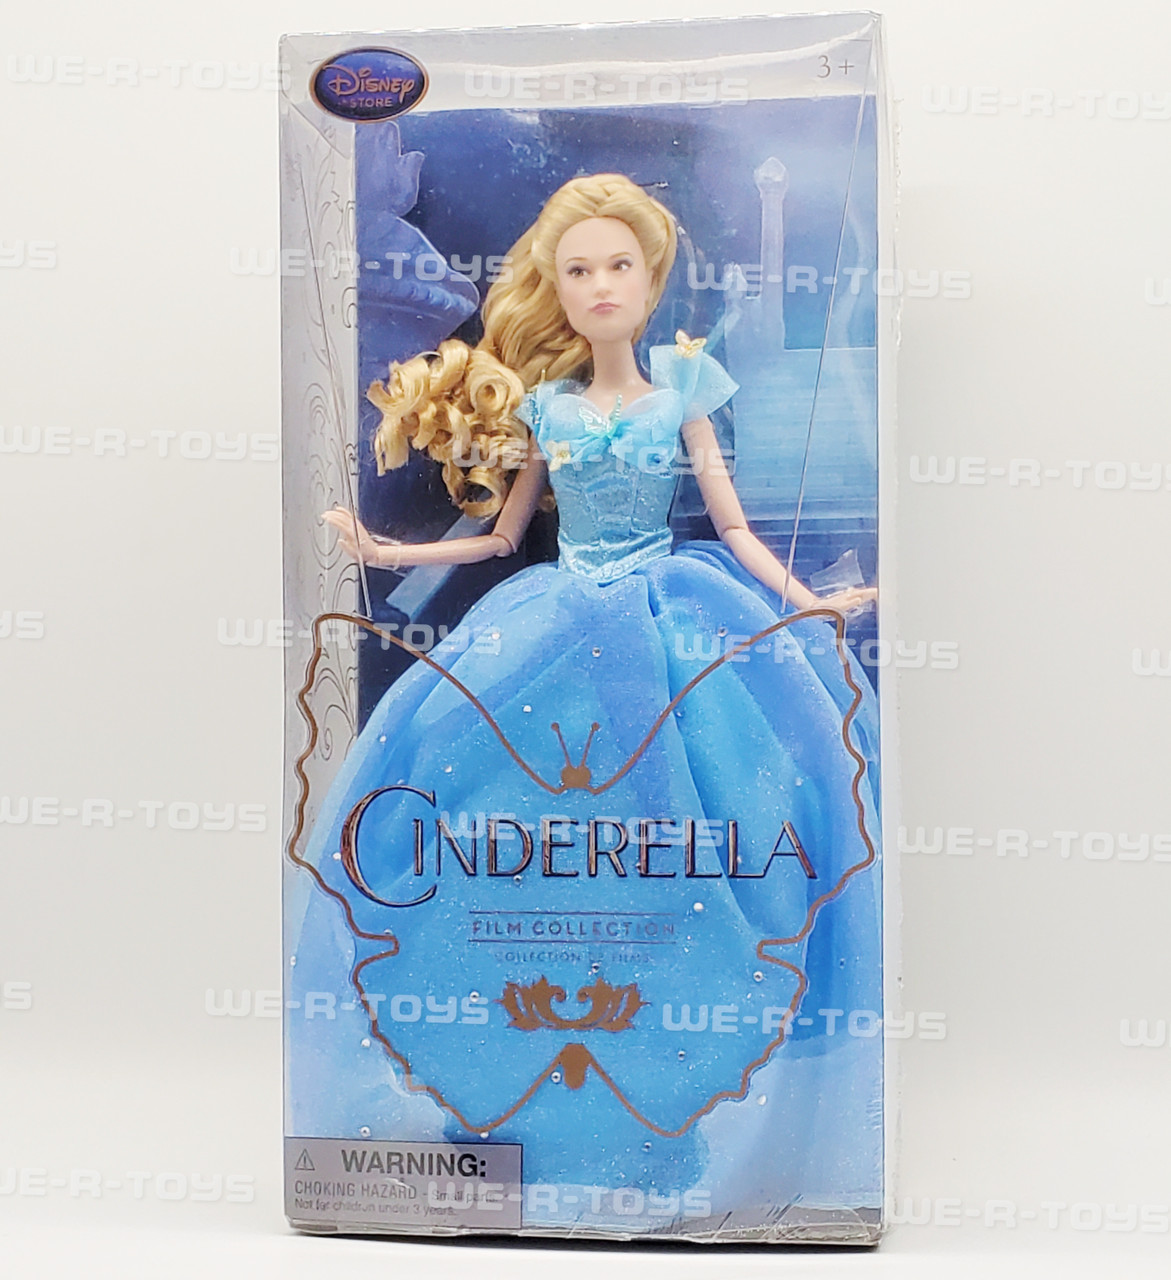 Disney Store Cinderella Film Collection Doll Royal Ball Blue Dress NRFB -  We-R-Toys